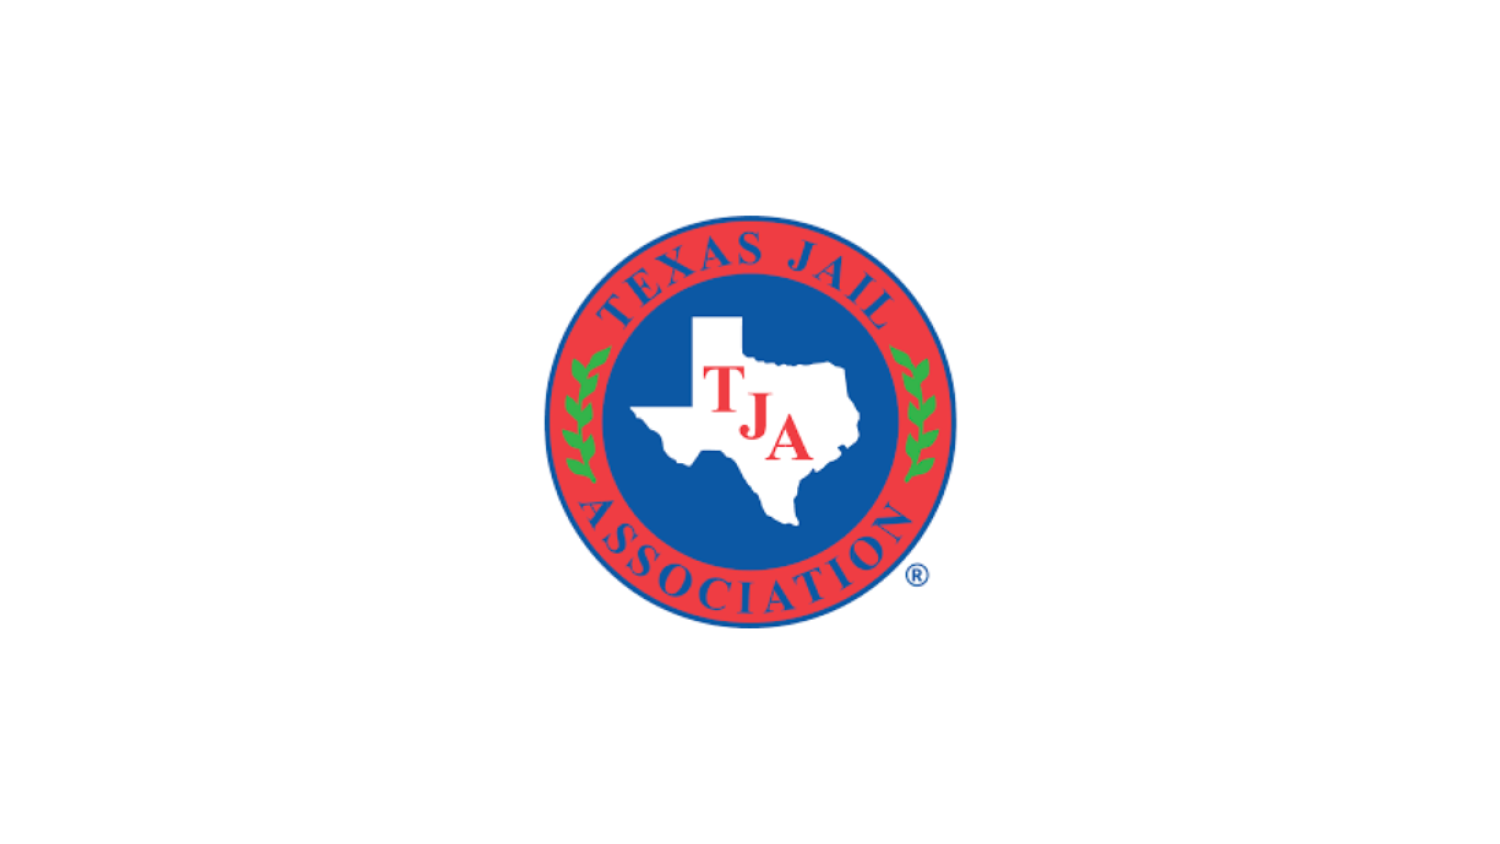 Texas Jail Association logo